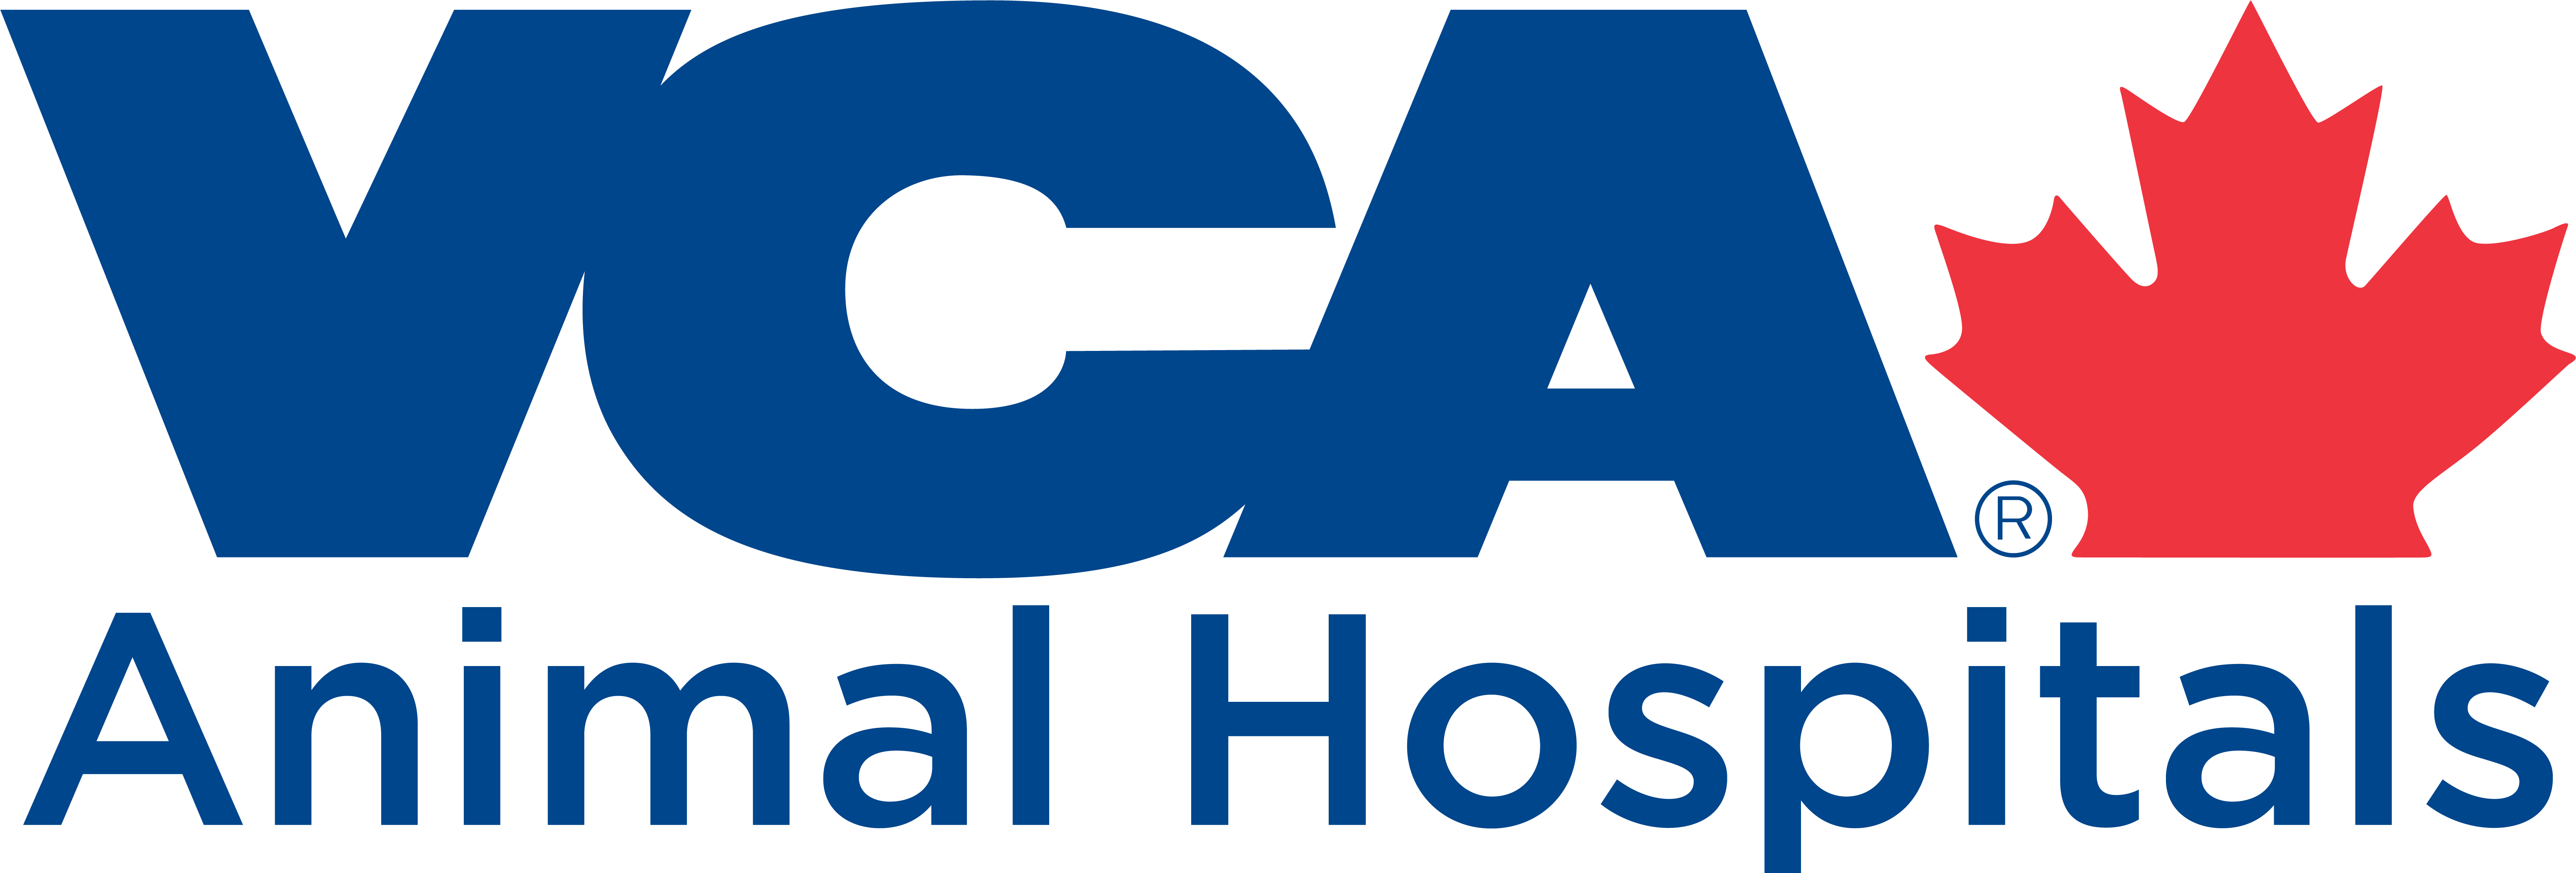 VCA Canada Cachet Village Animal Hospital